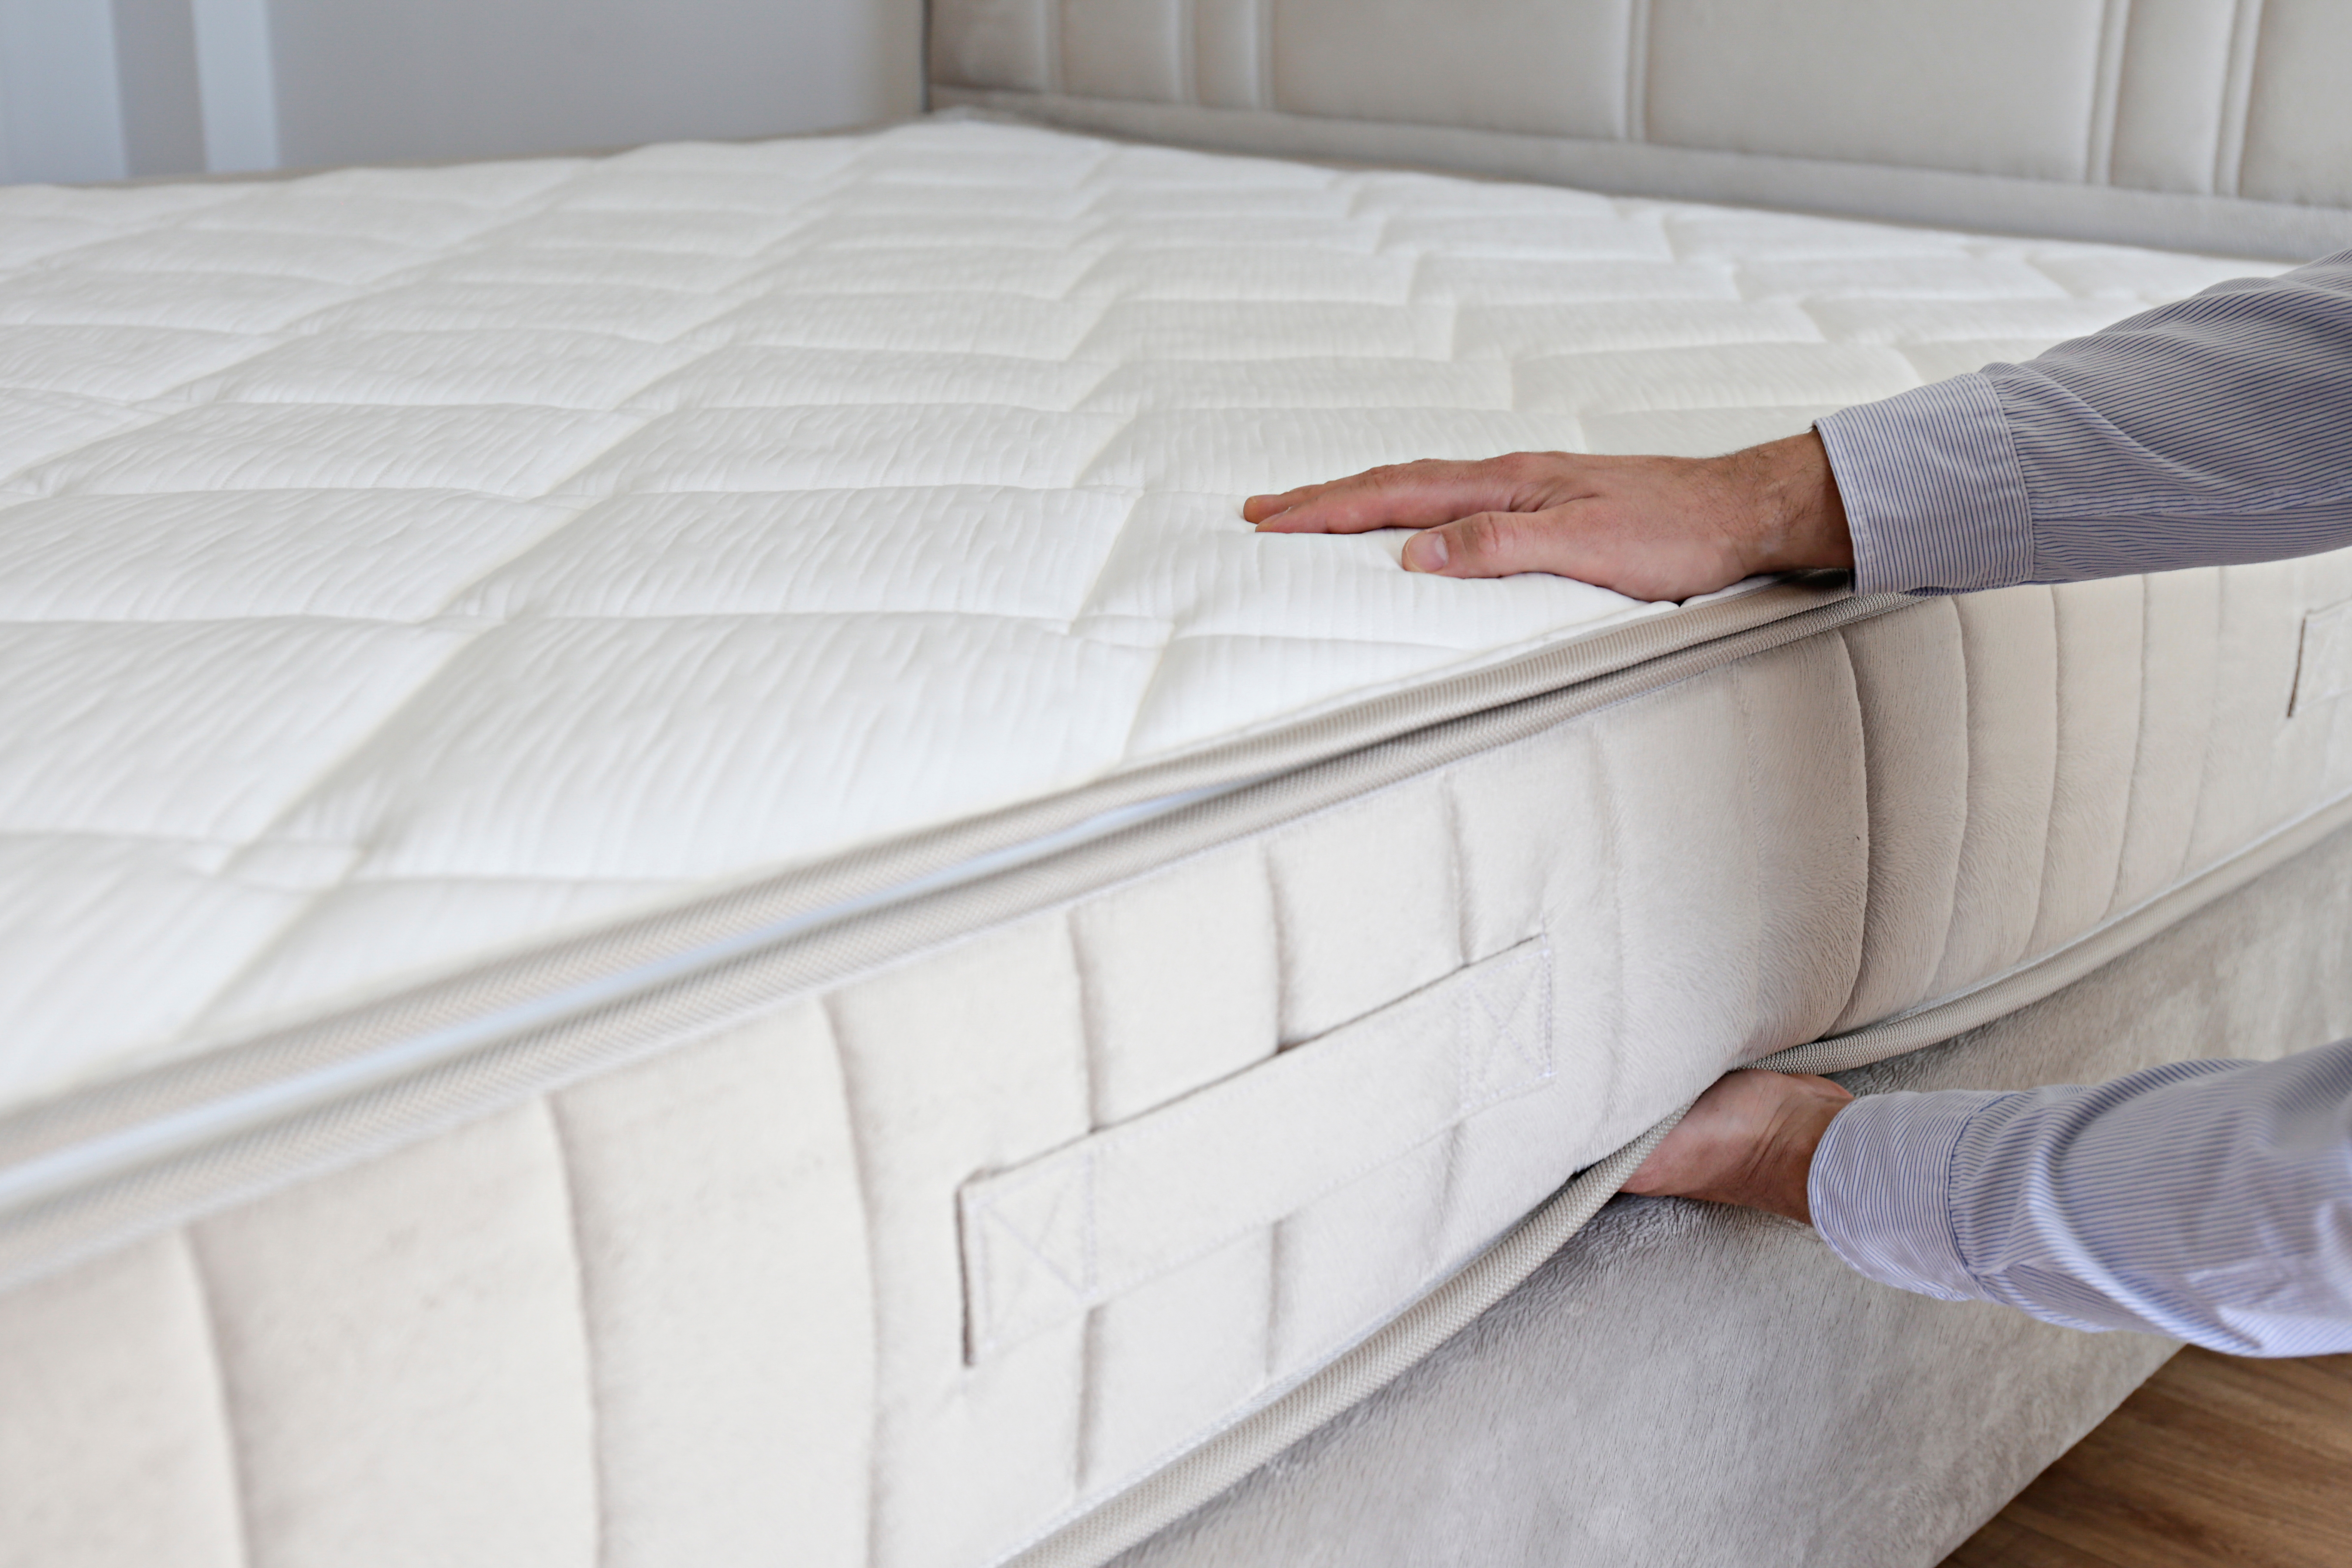 A person holding a white mattress | Source: Shutterstock